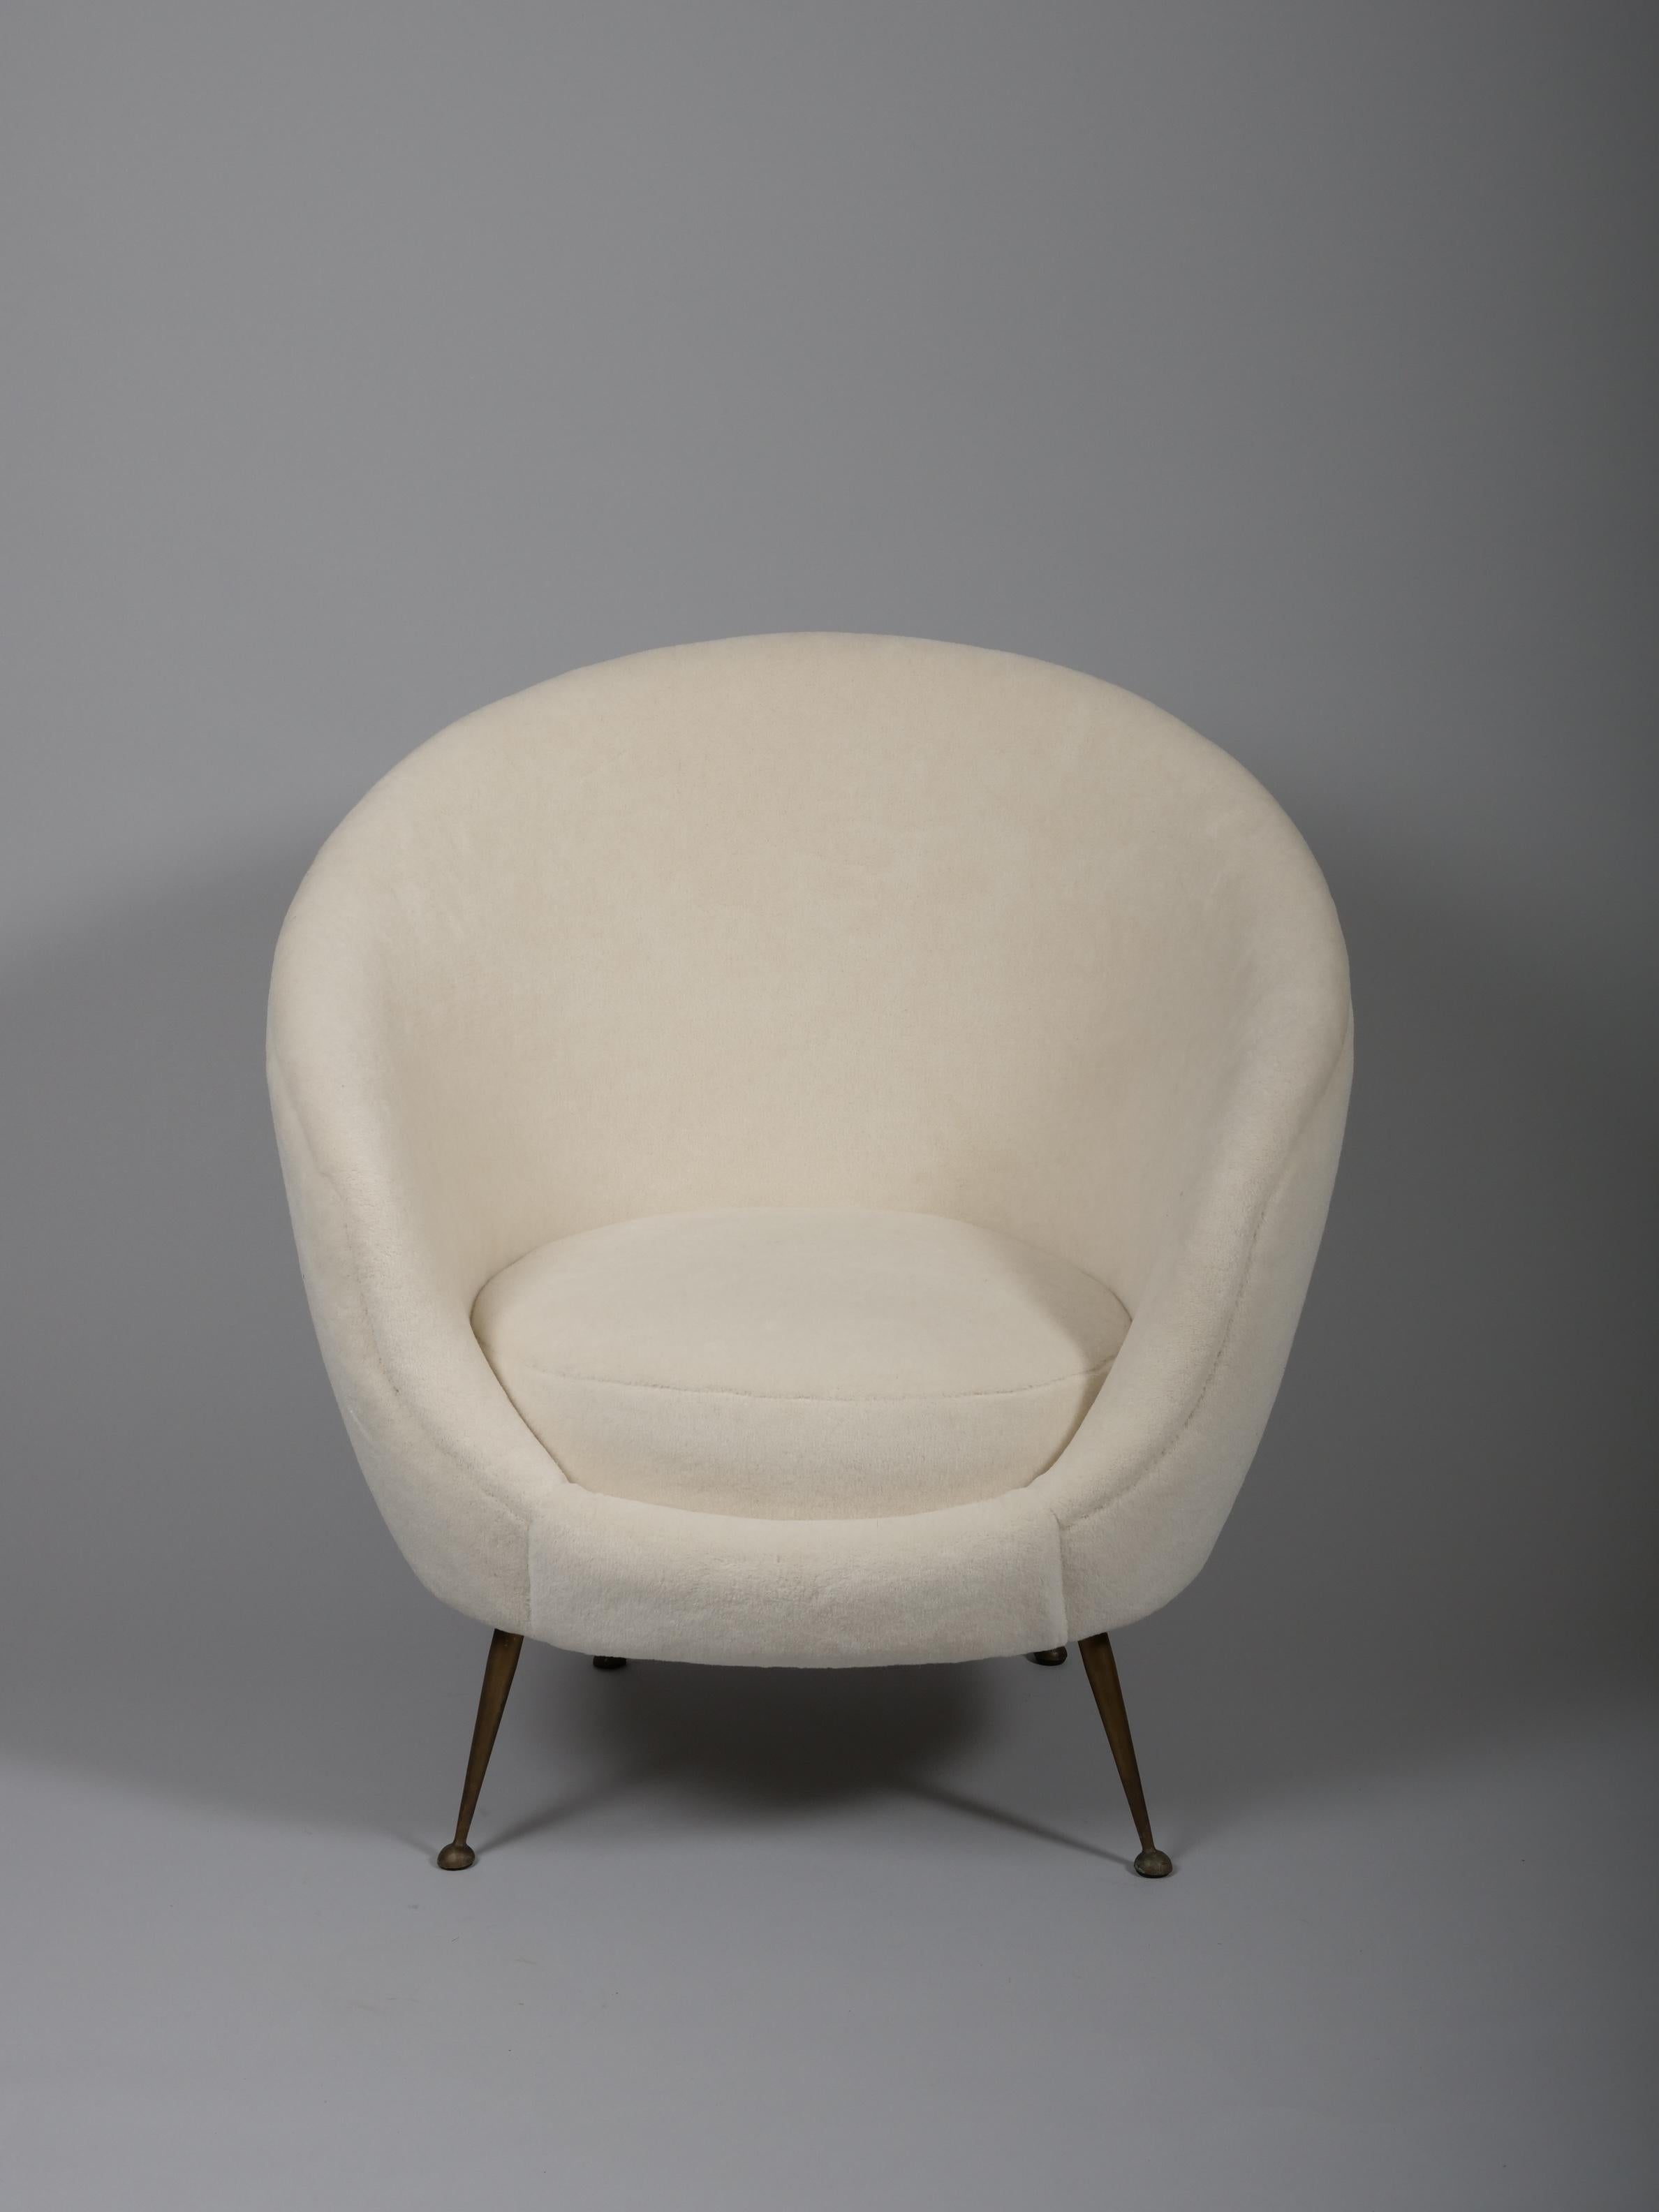 Pair Italian mid century egg shape chairs. Re upholstered in Alpaca wool velvet For Sale 2